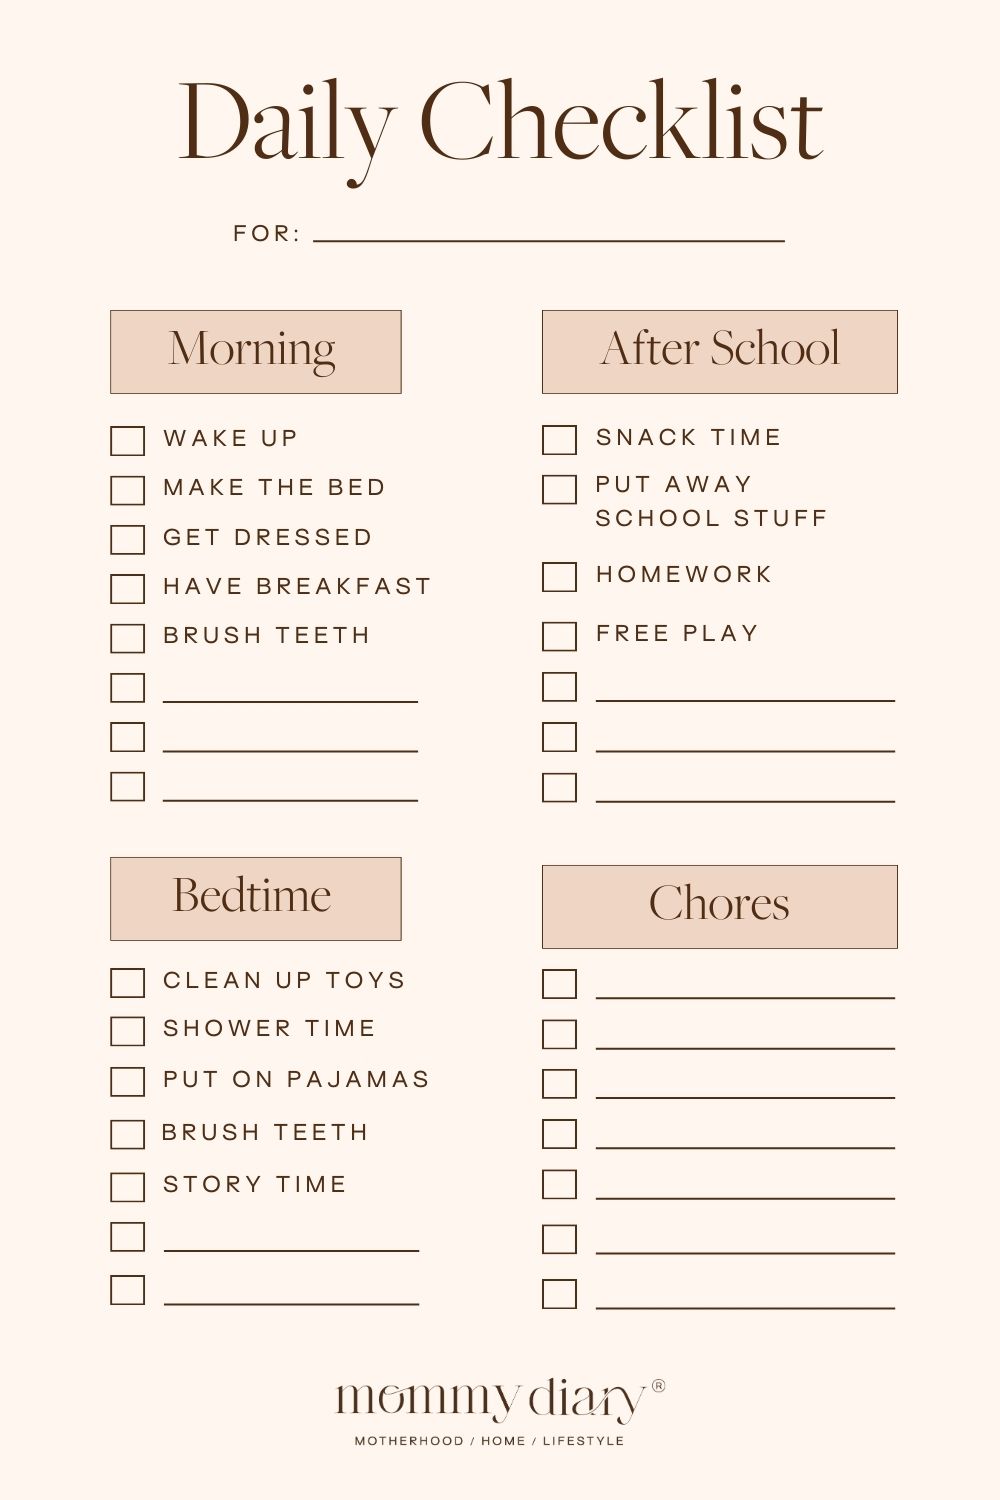 Kids chores daily checklist